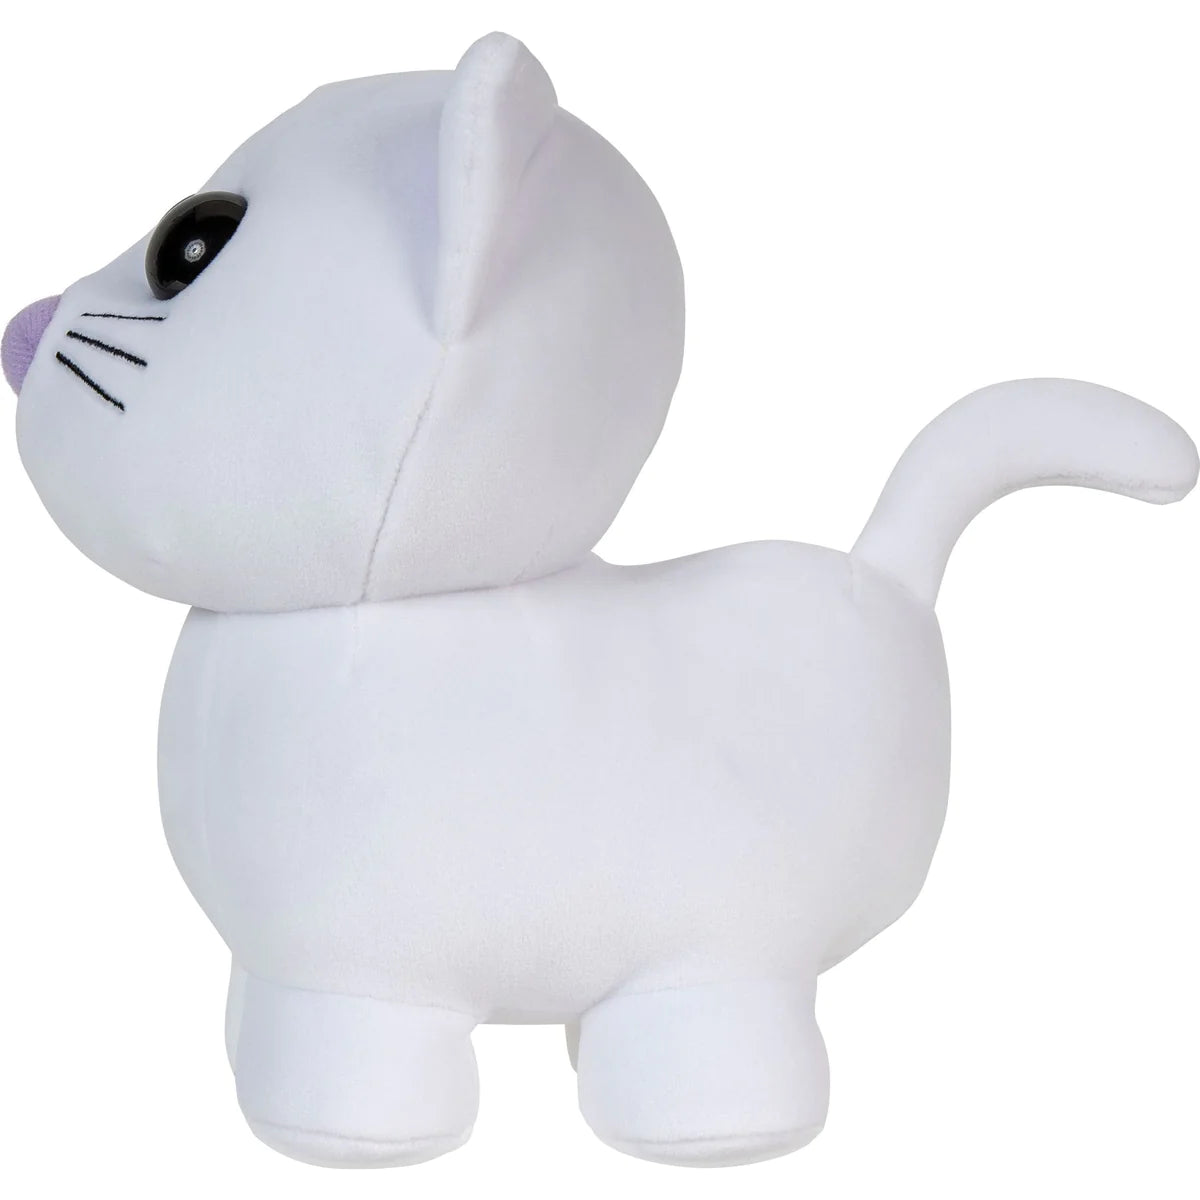 Adopt Me! 8 Collector Plush Pet Kitsune, Stuffed Animal Plush Toy